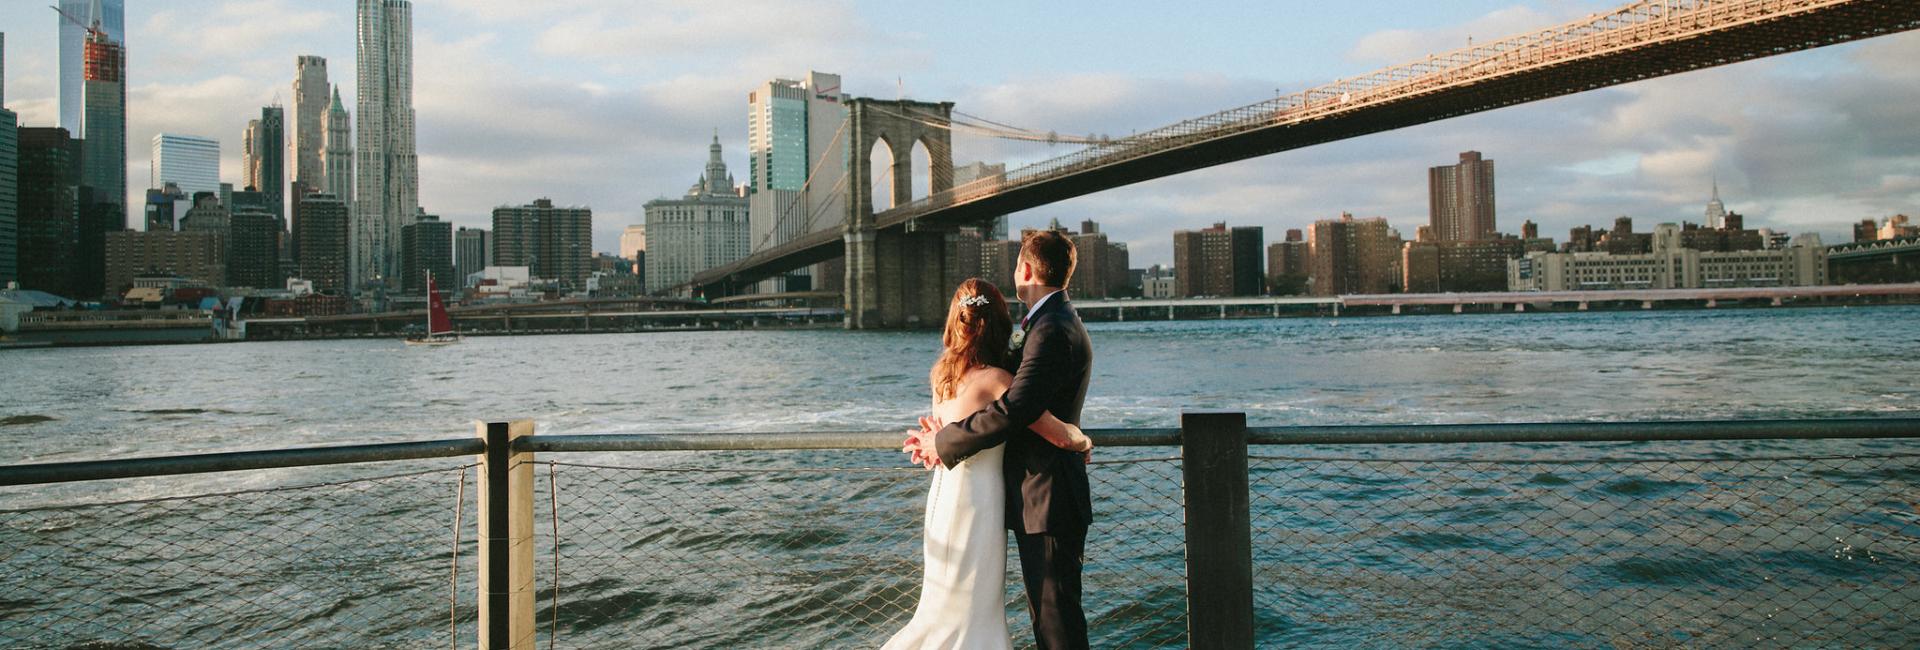 Brooklyn Wedding Venues 1 Hotel Brooklyn Bridge